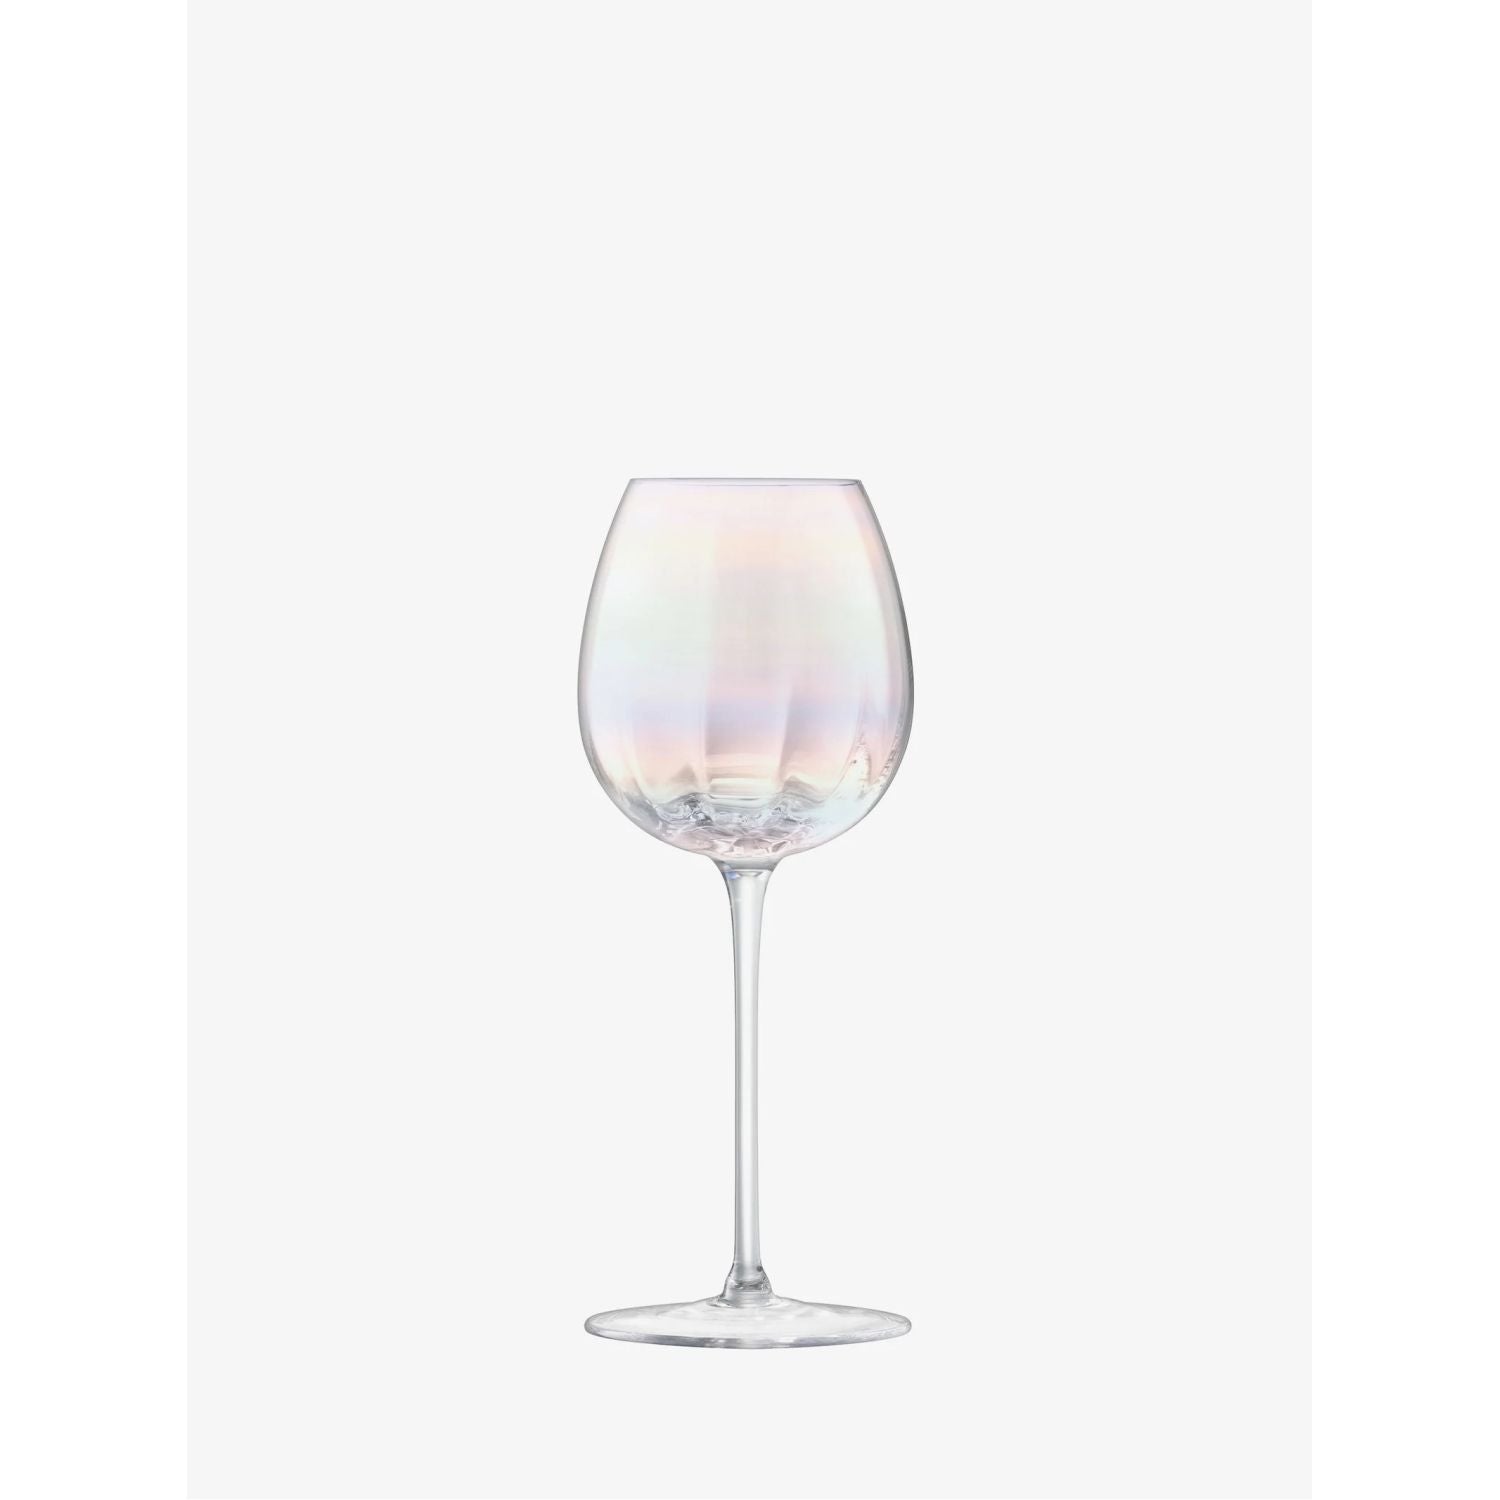 Pearl White Wine Glass Set of 8 - LSA INTERNATIONAL